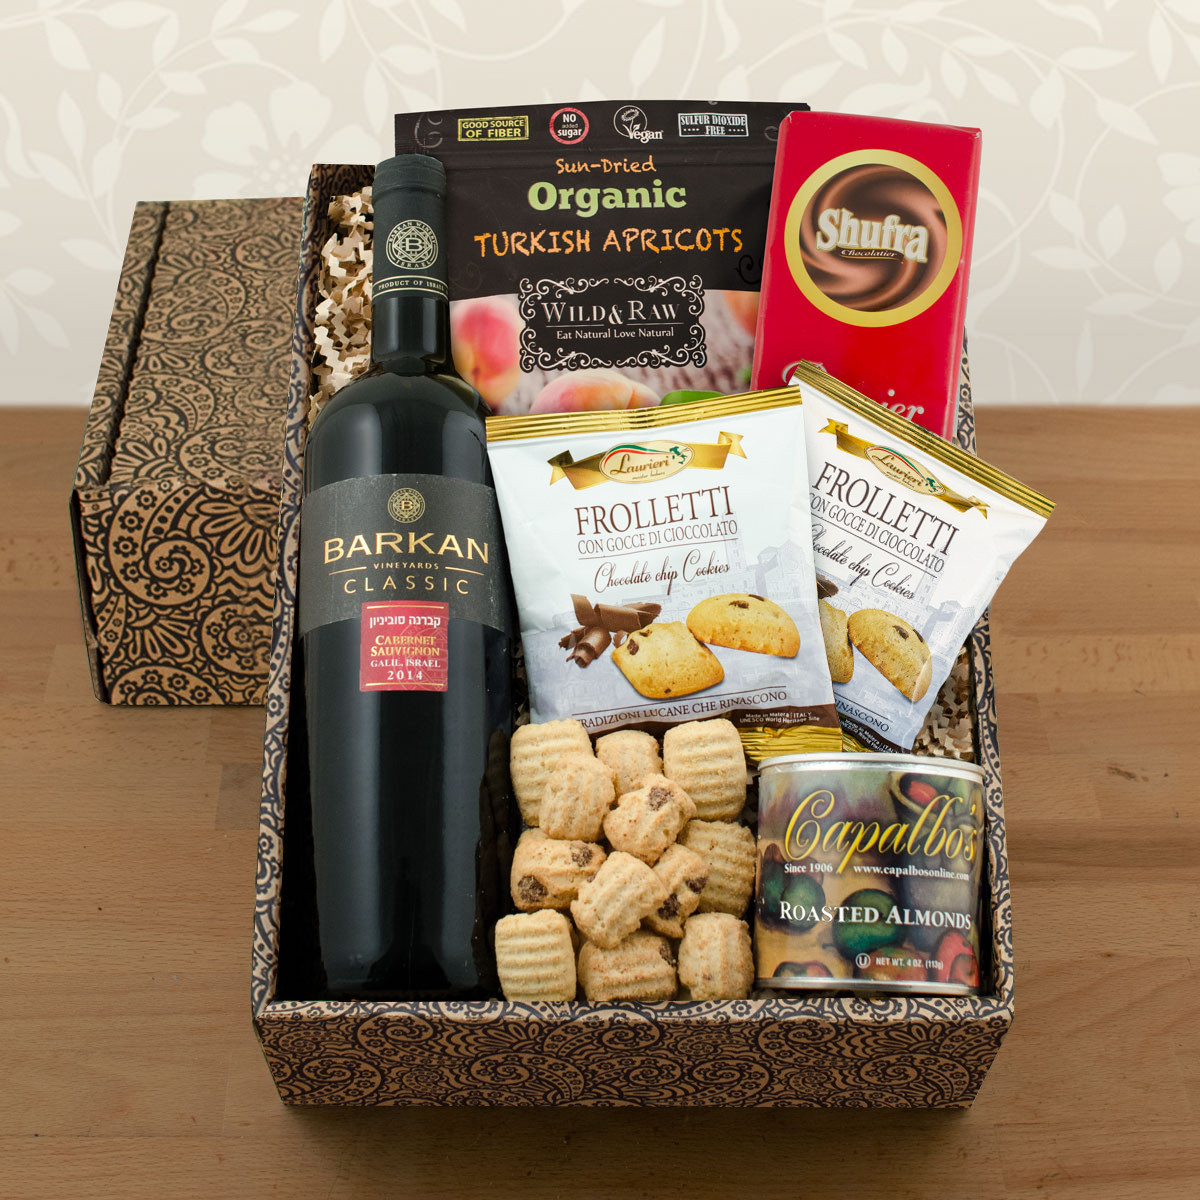 Cab Sauv and Gourmet Gift Box